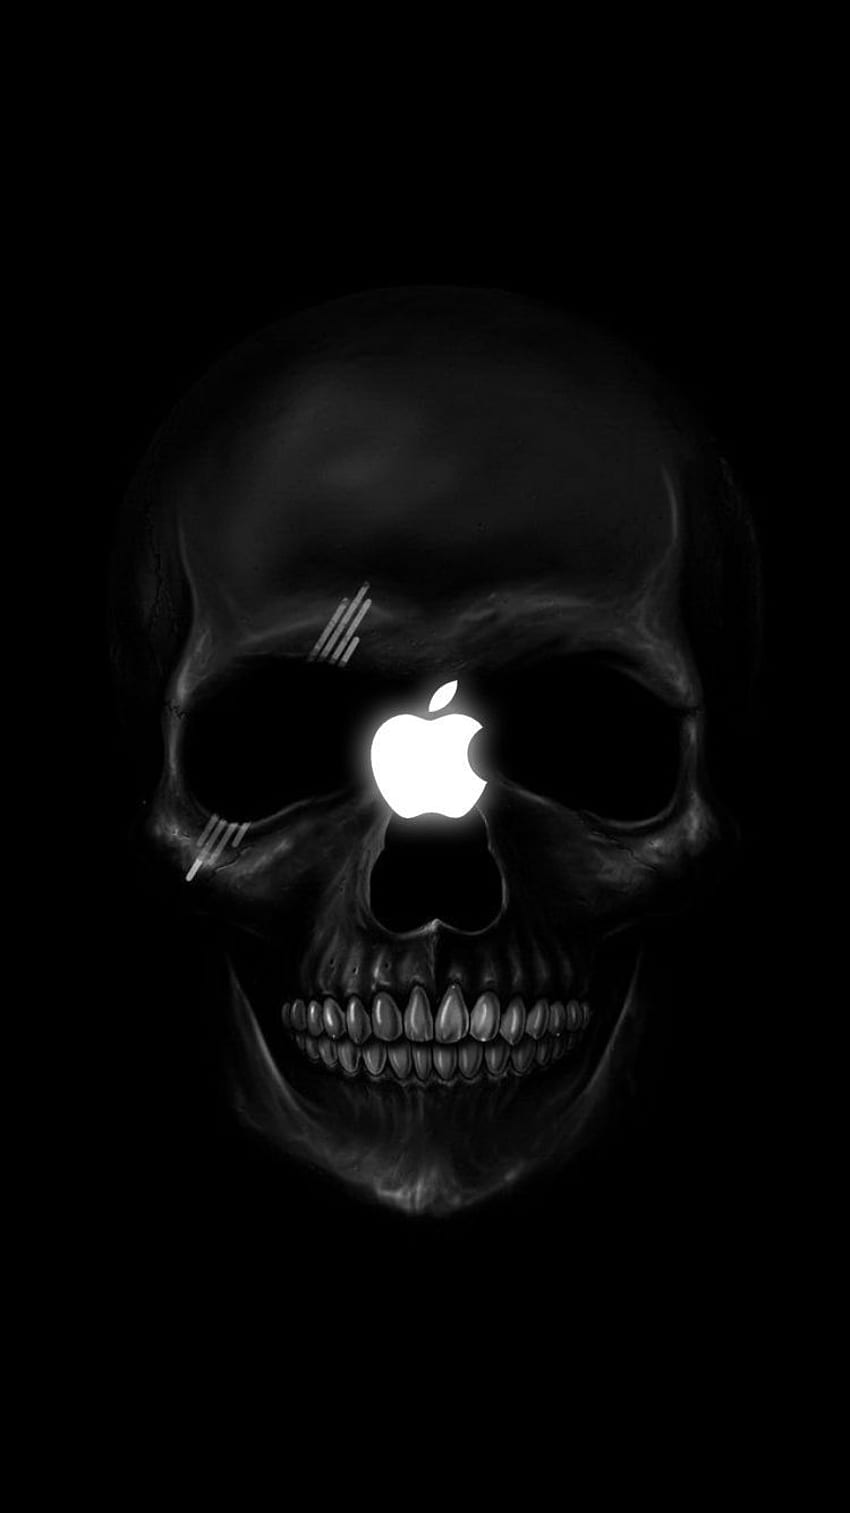 Alex omahony sobre negro. Apple, logotipo de iPhone, logotipo de Apple iphone, logotipo de Skull Apple fondo de pantalla del teléfono